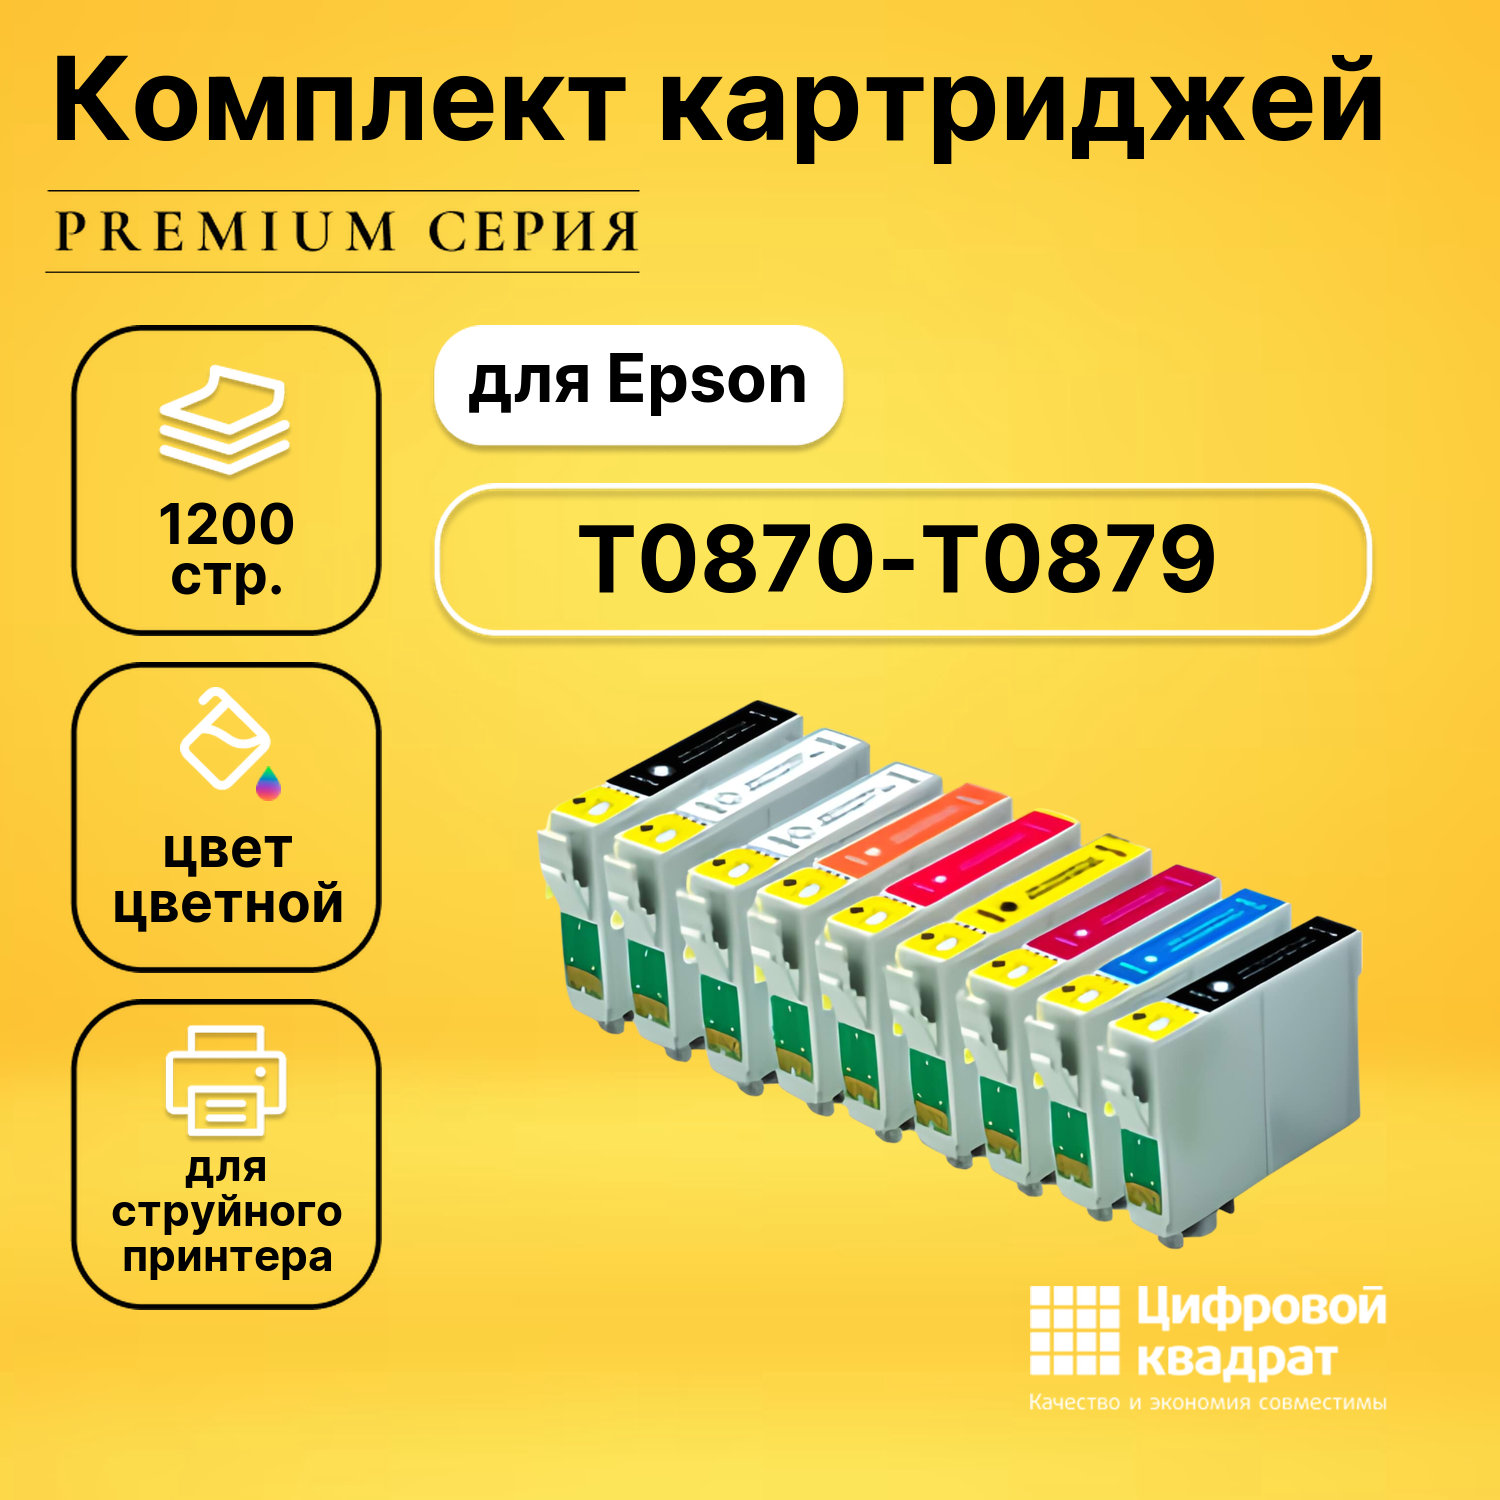 Набор картриджей DS T0870-T0879 Epson совместимый